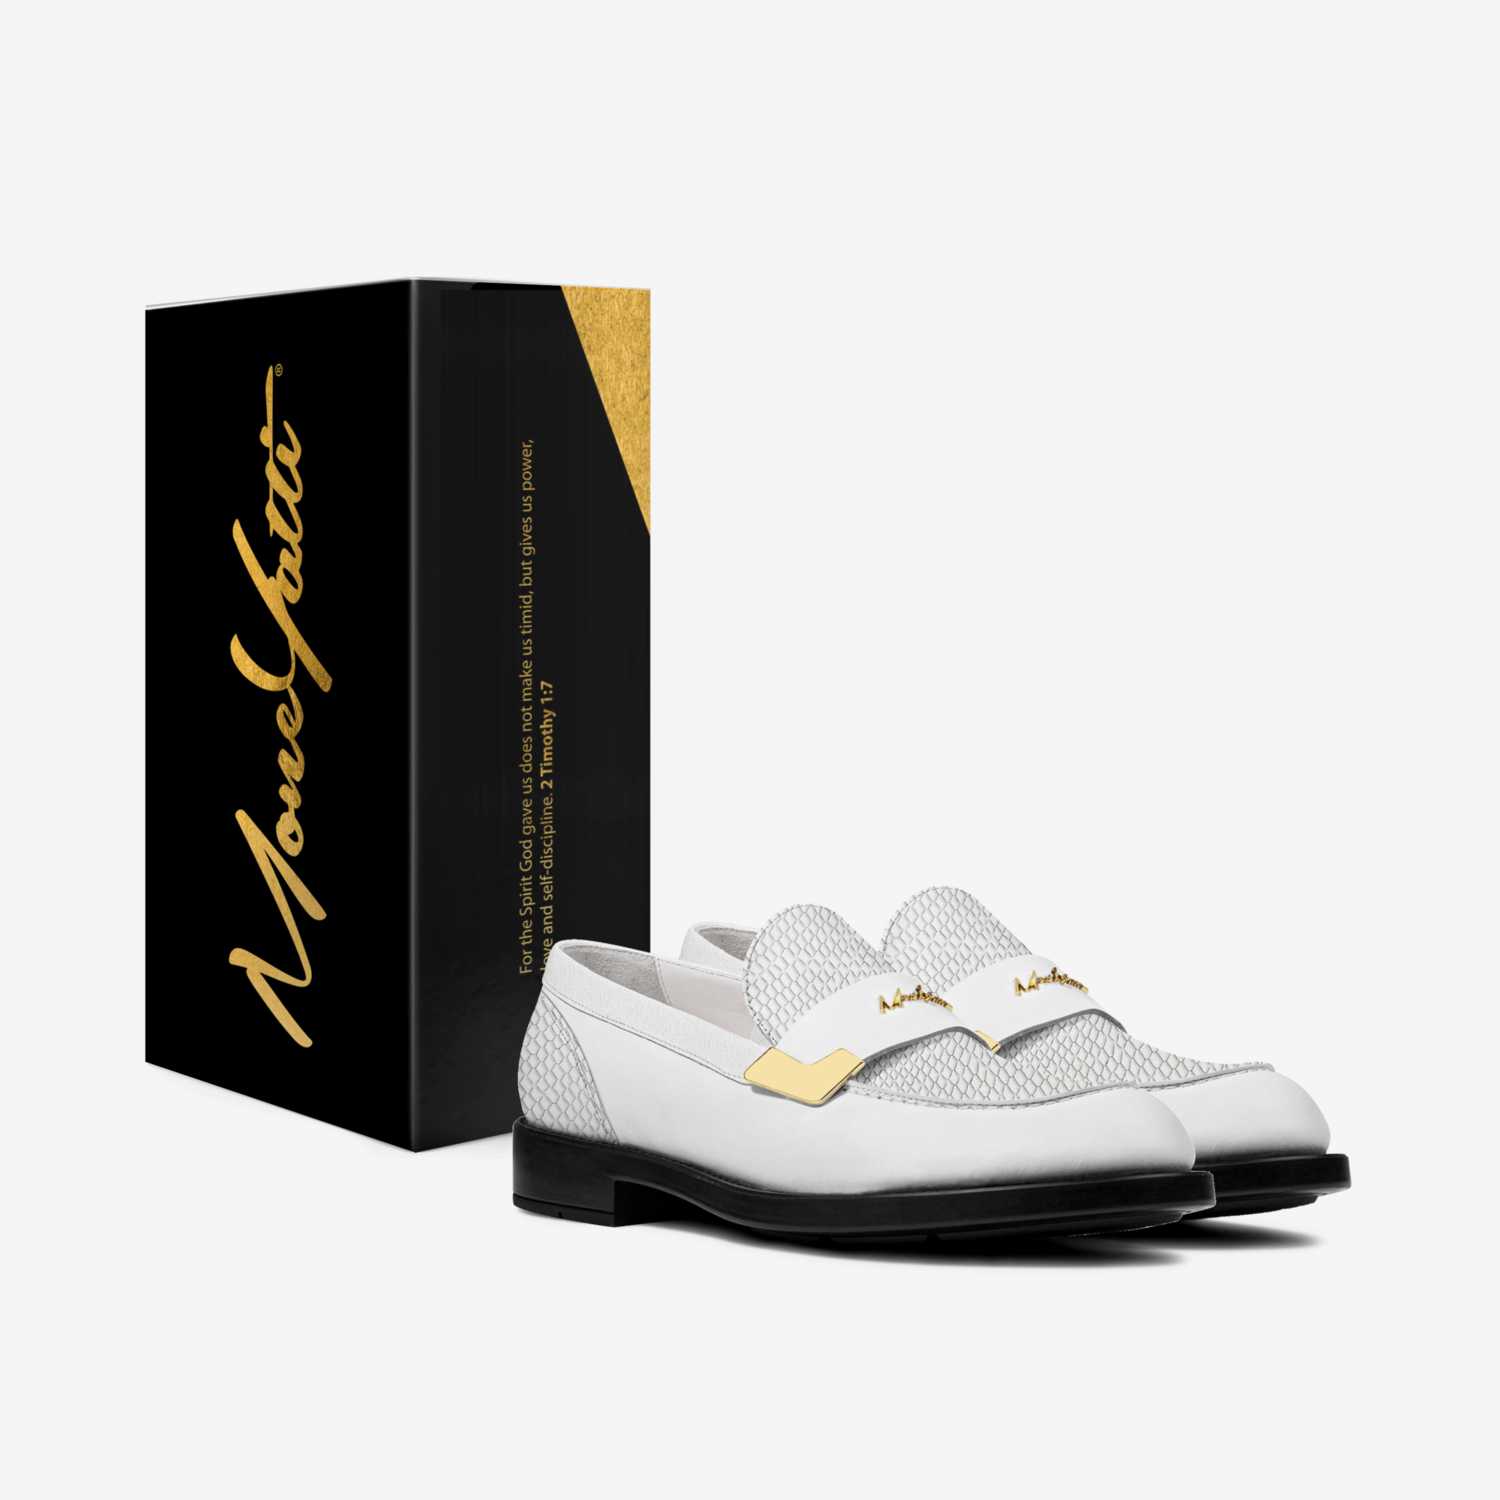 ELEGANTDRIP 014 custom made in Italy shoes by Moneyatti Brand | Box view